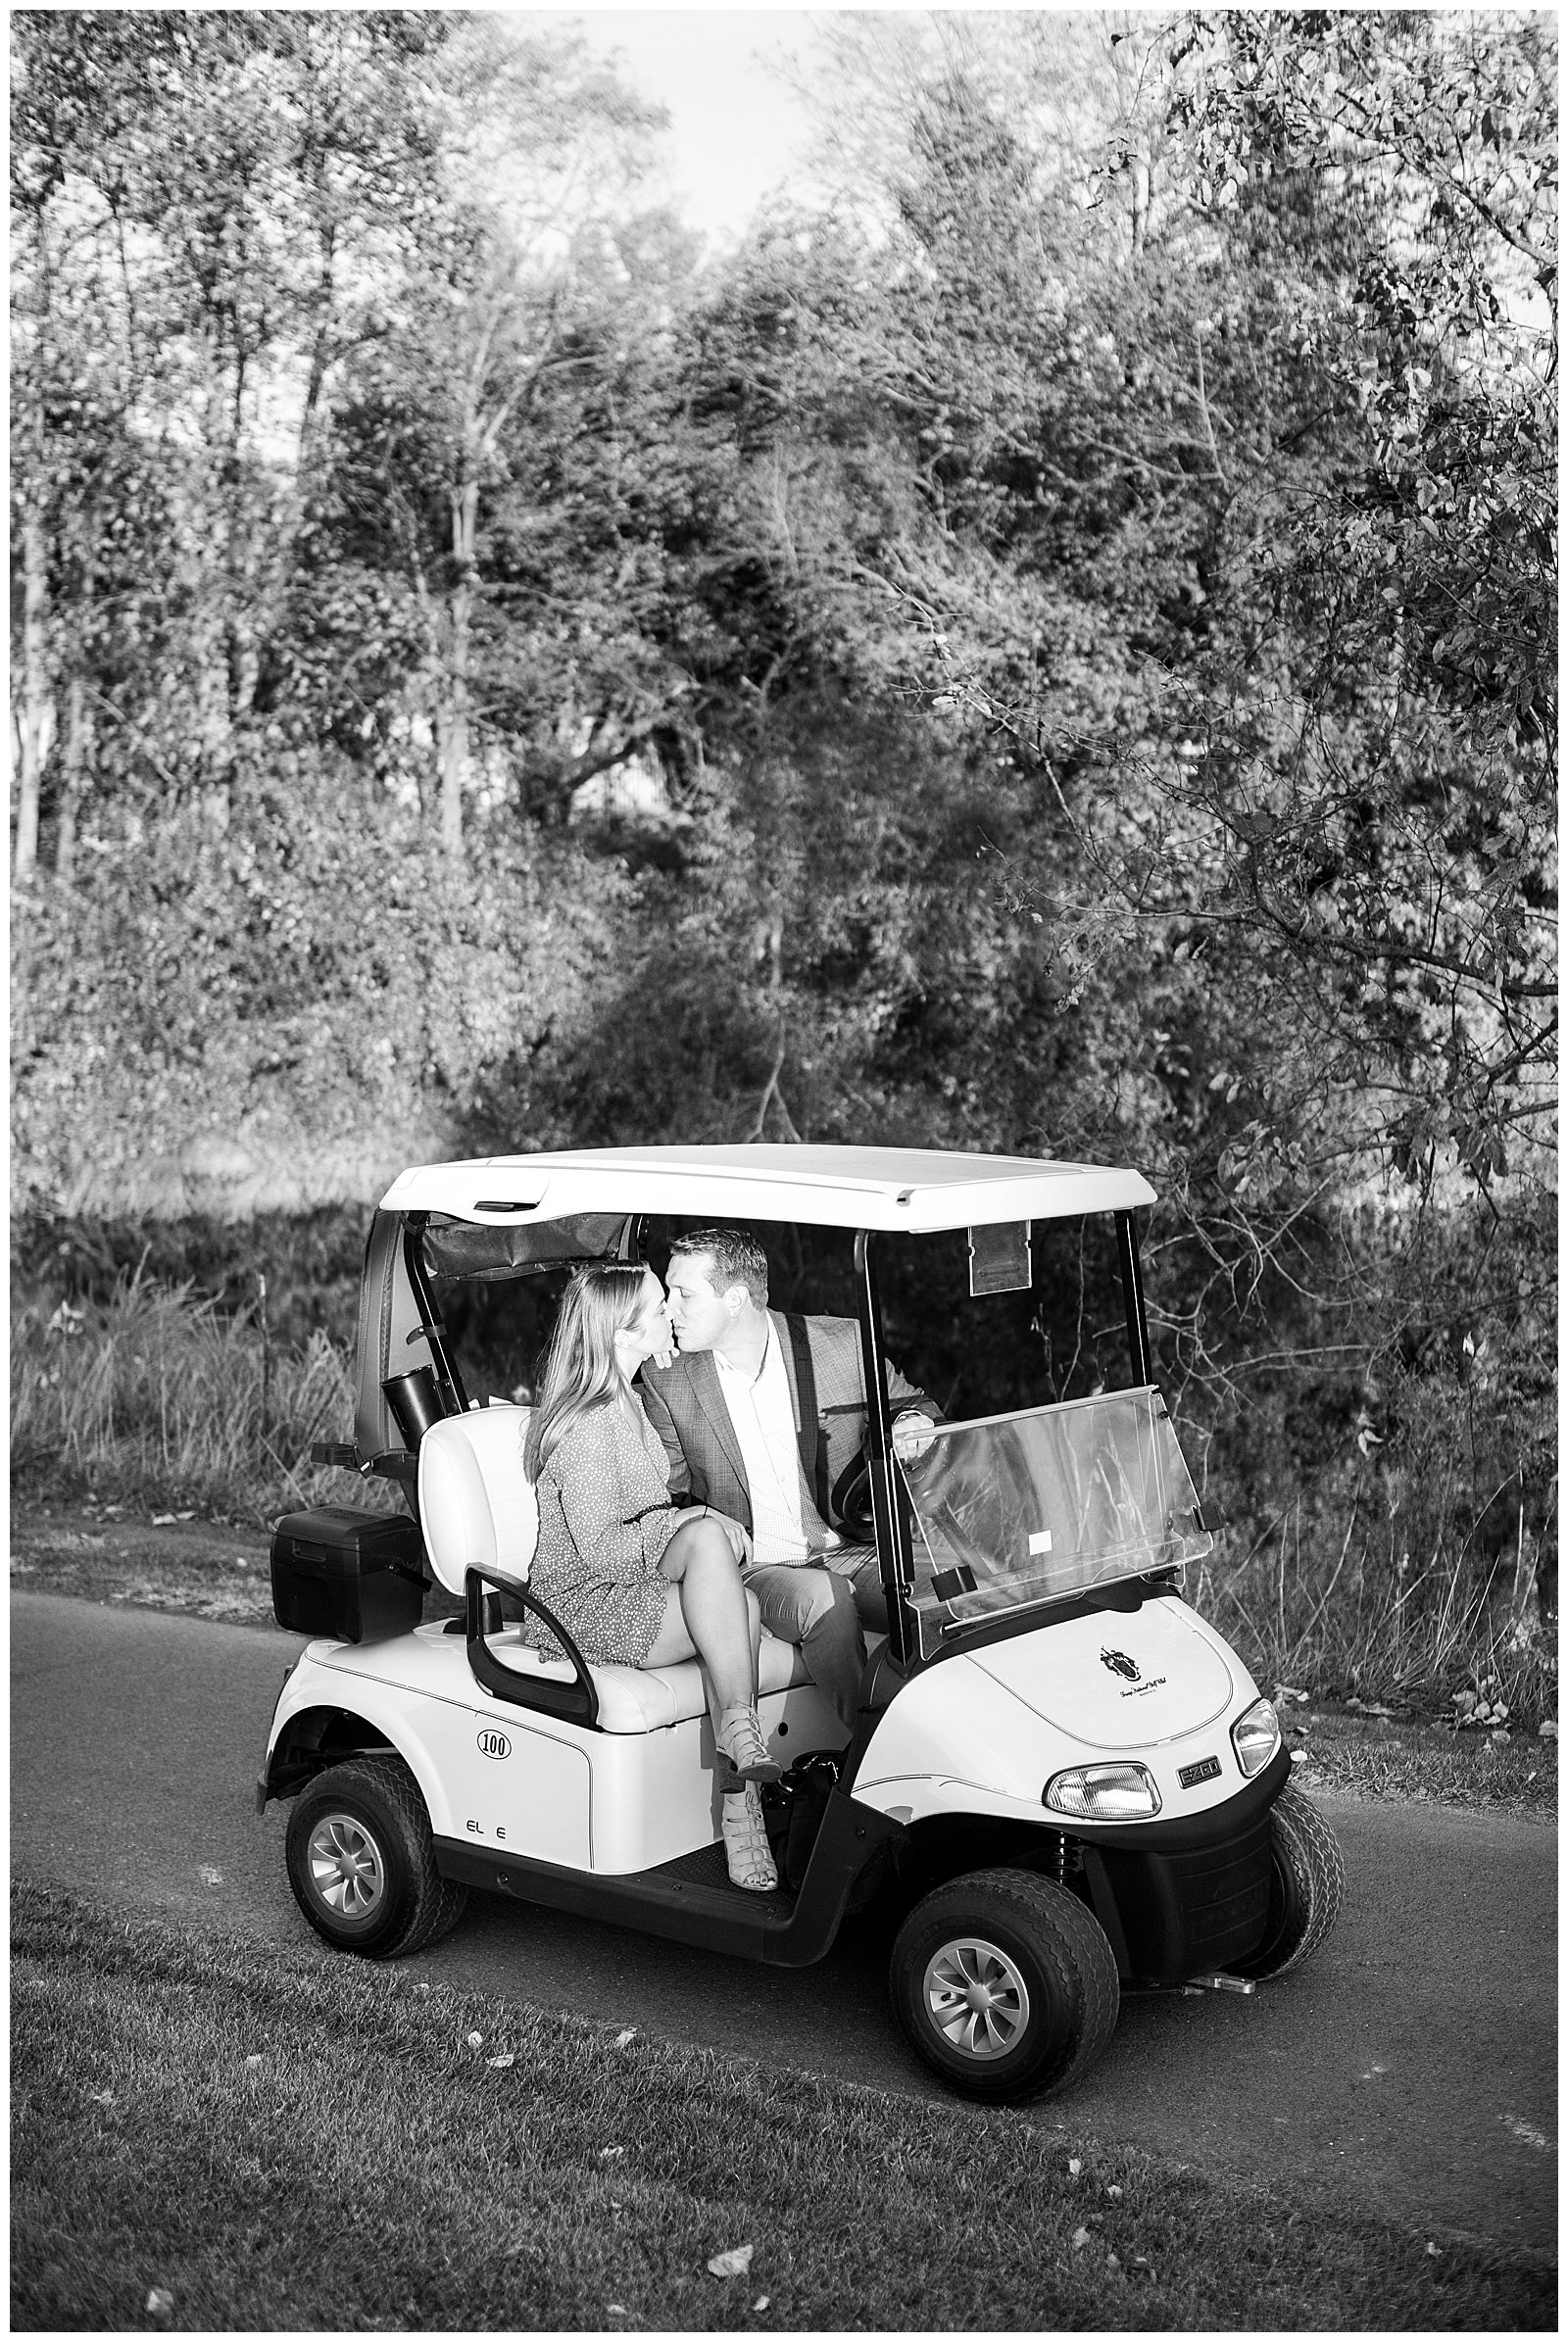 Trump National Golf Club Washington DC black and white photo golf cart